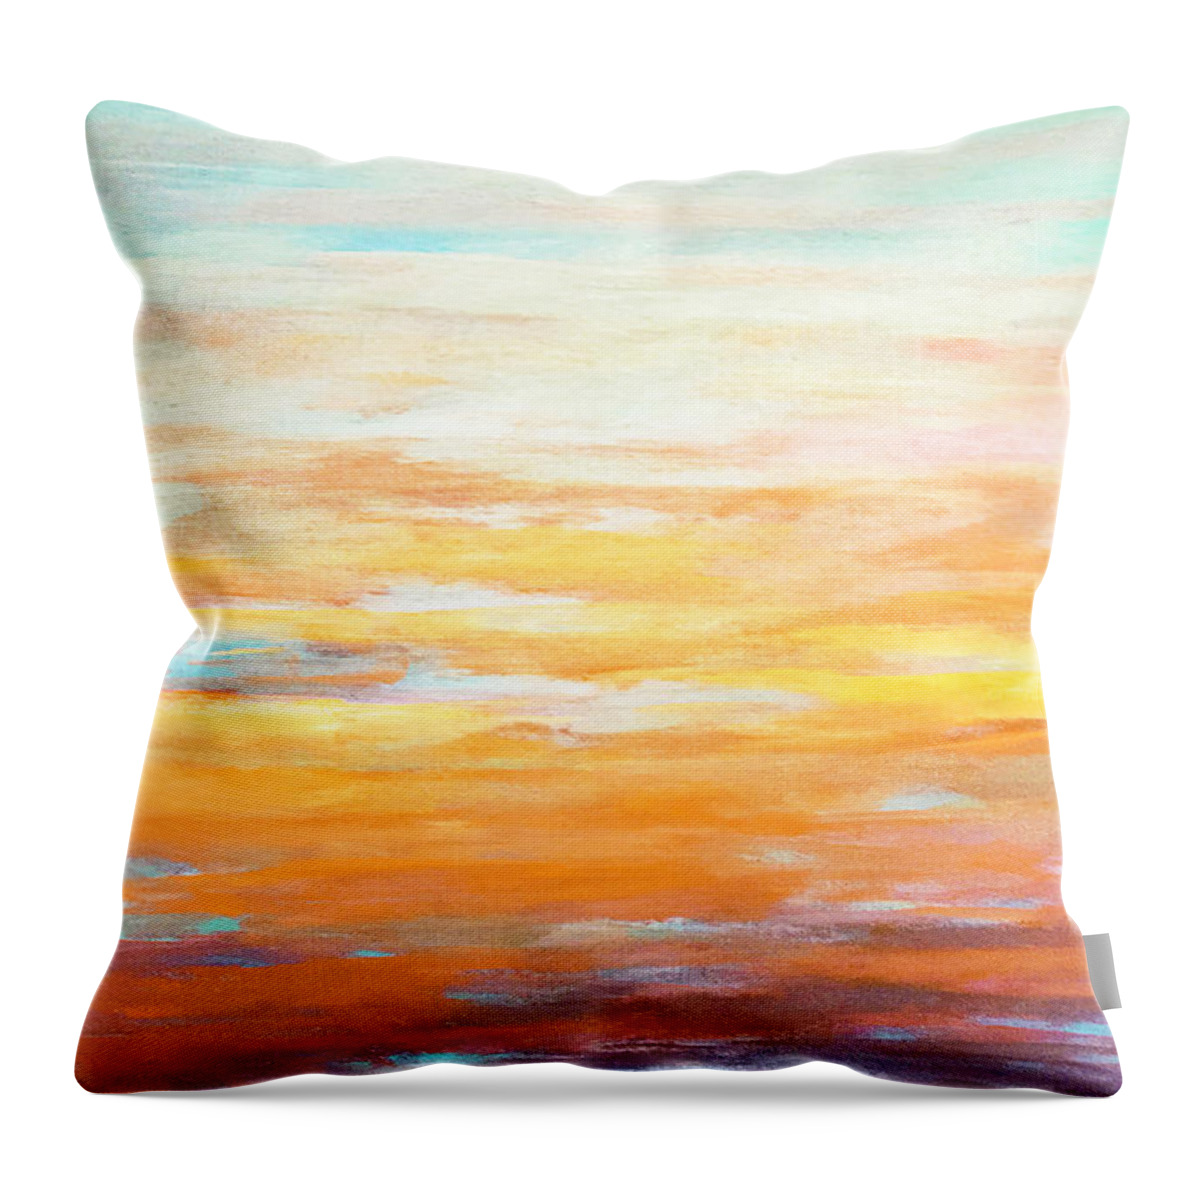 Sunrise Throw Pillow featuring the digital art Bright Dawn by Linda Bailey